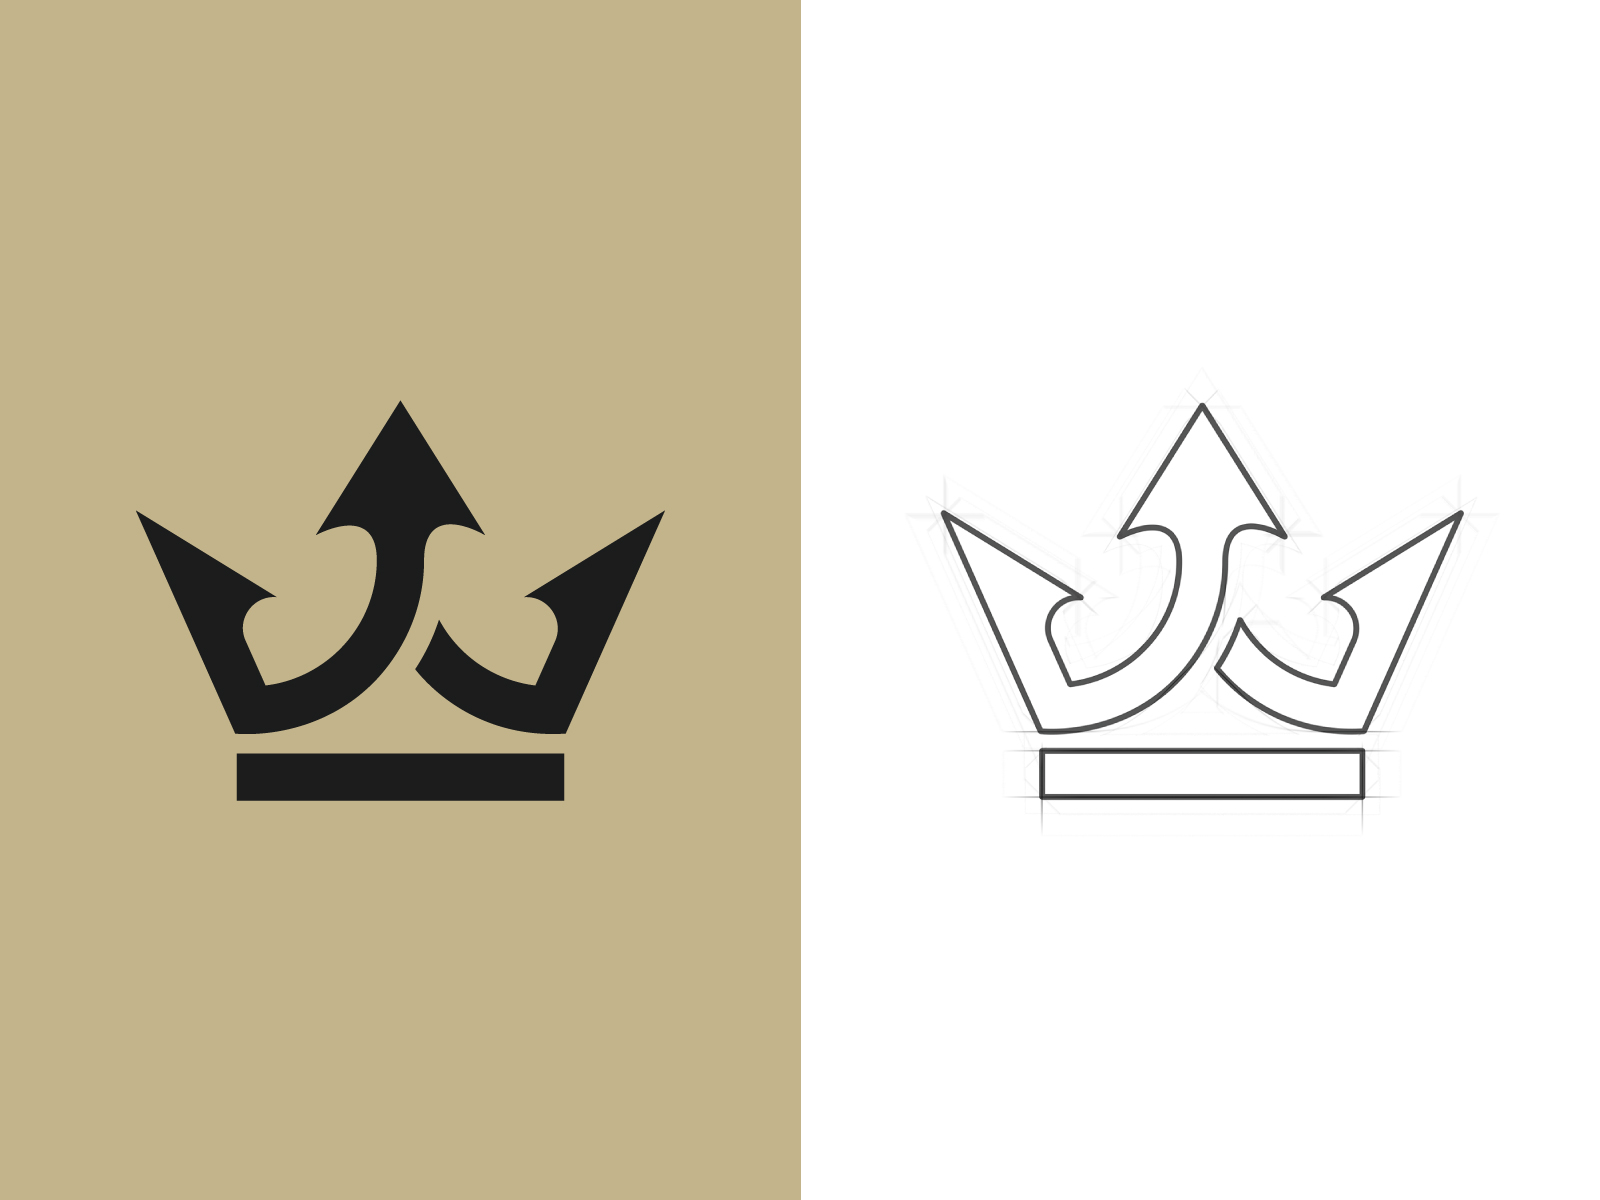 Royal Crown Logo by Alin Ionita on Dribbble